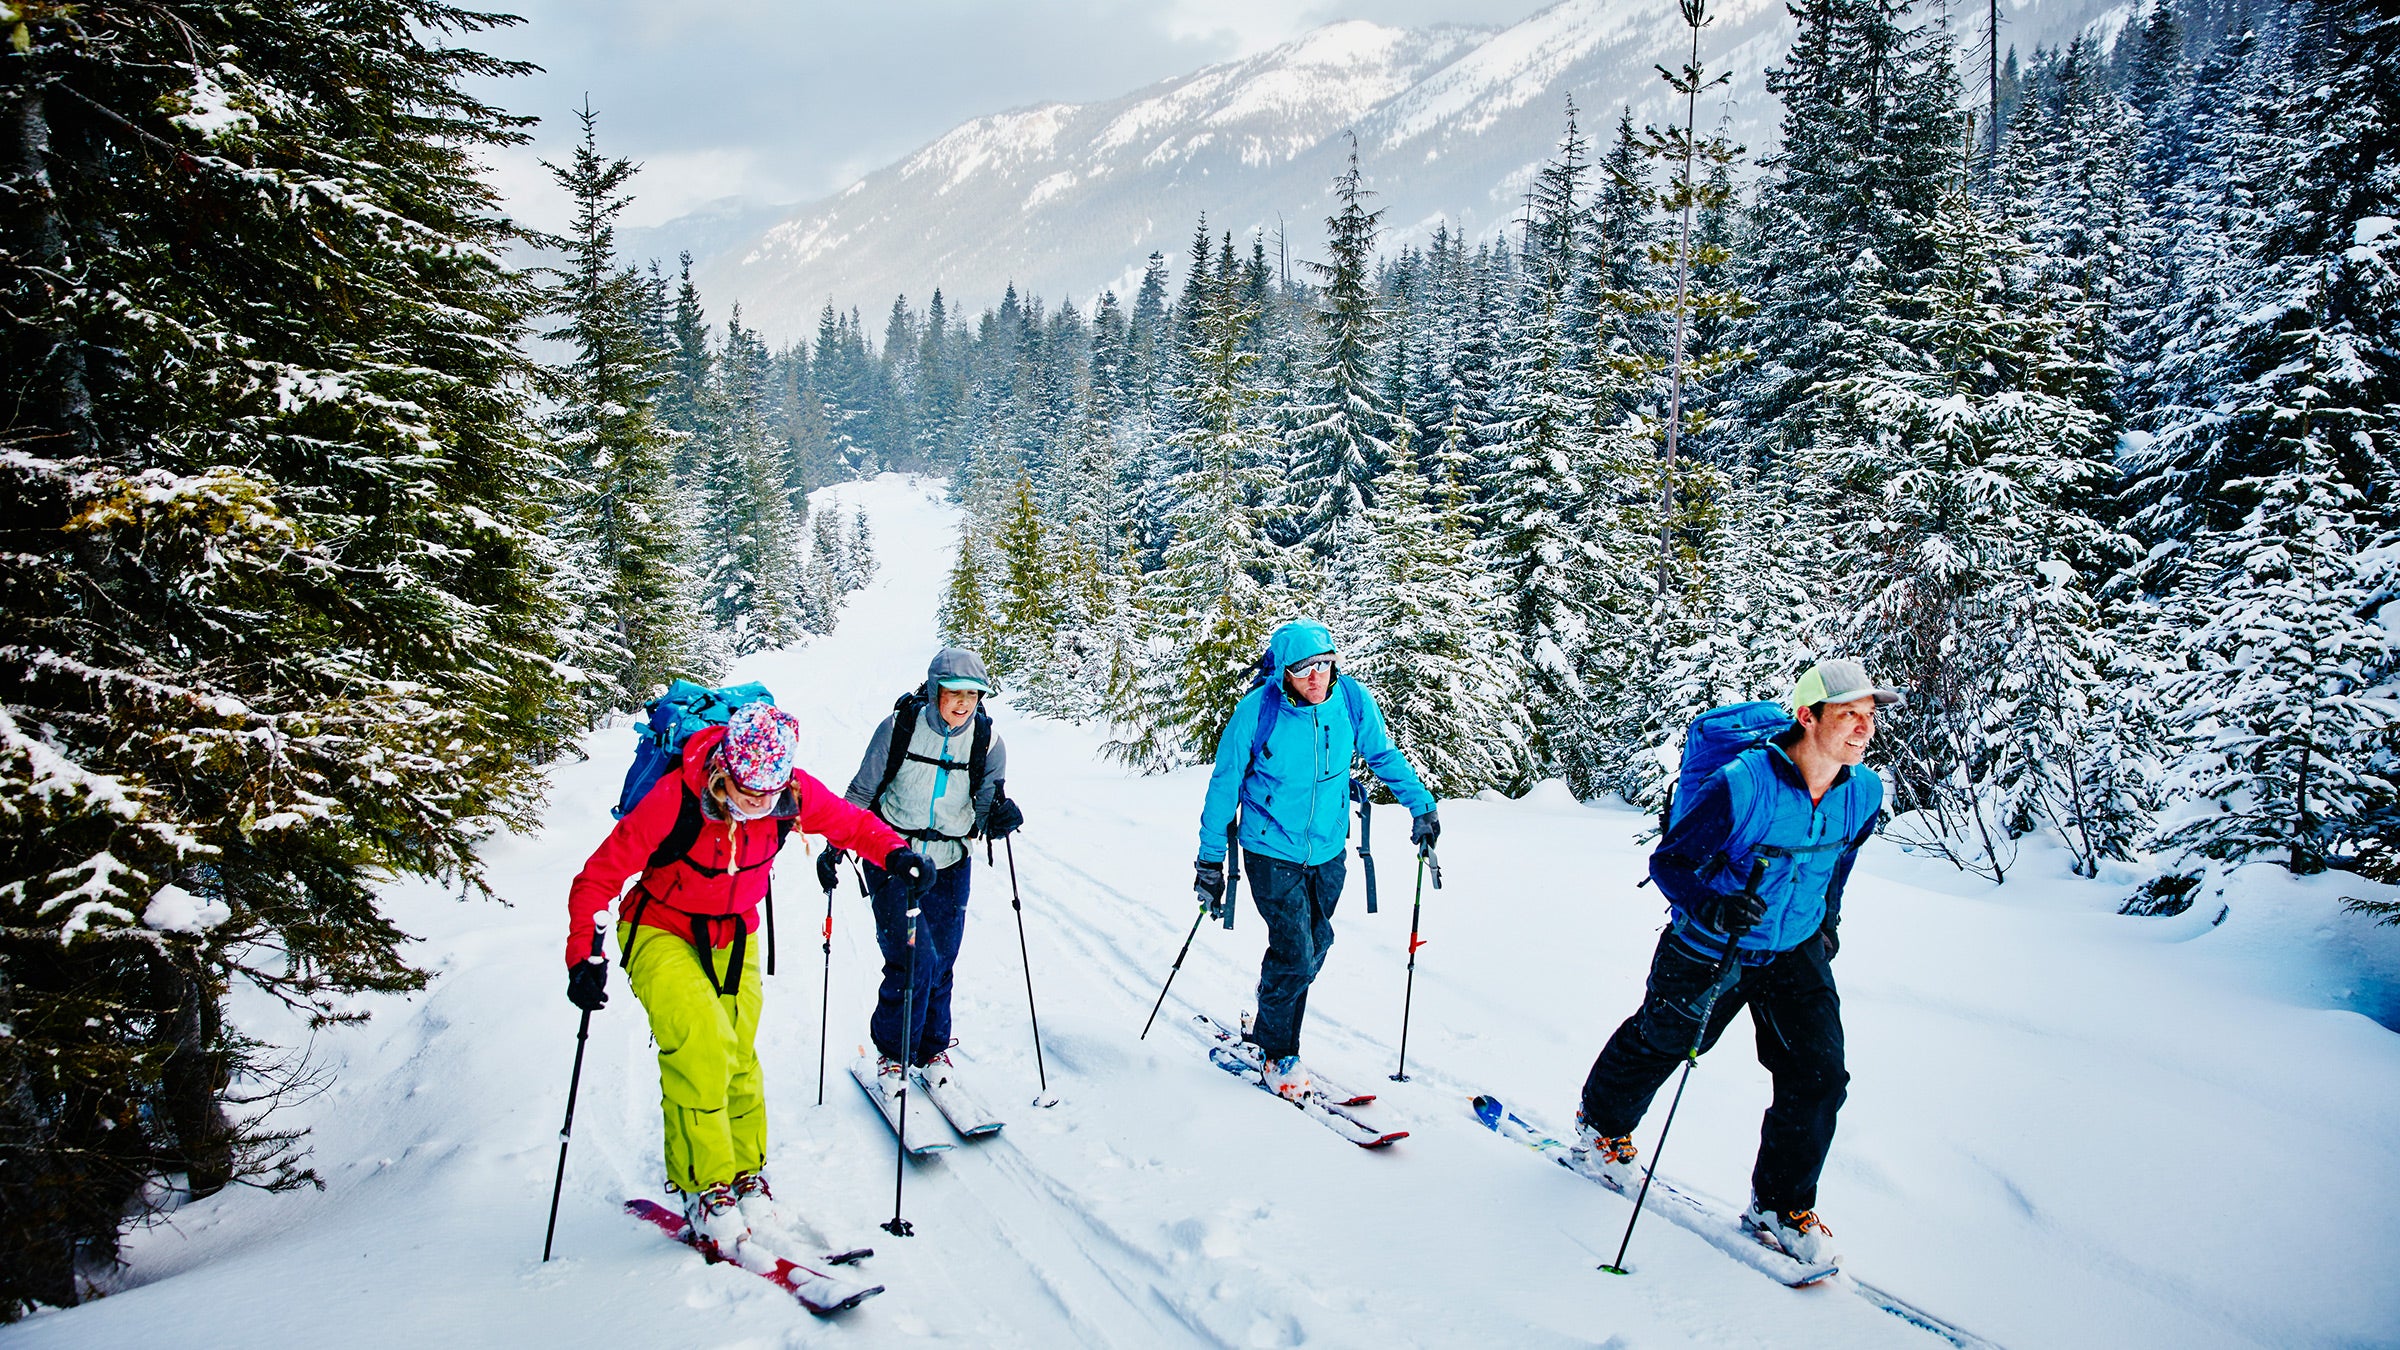 Avalanche Women's Full Length Zipper Pocket Hiking Fleece Lined